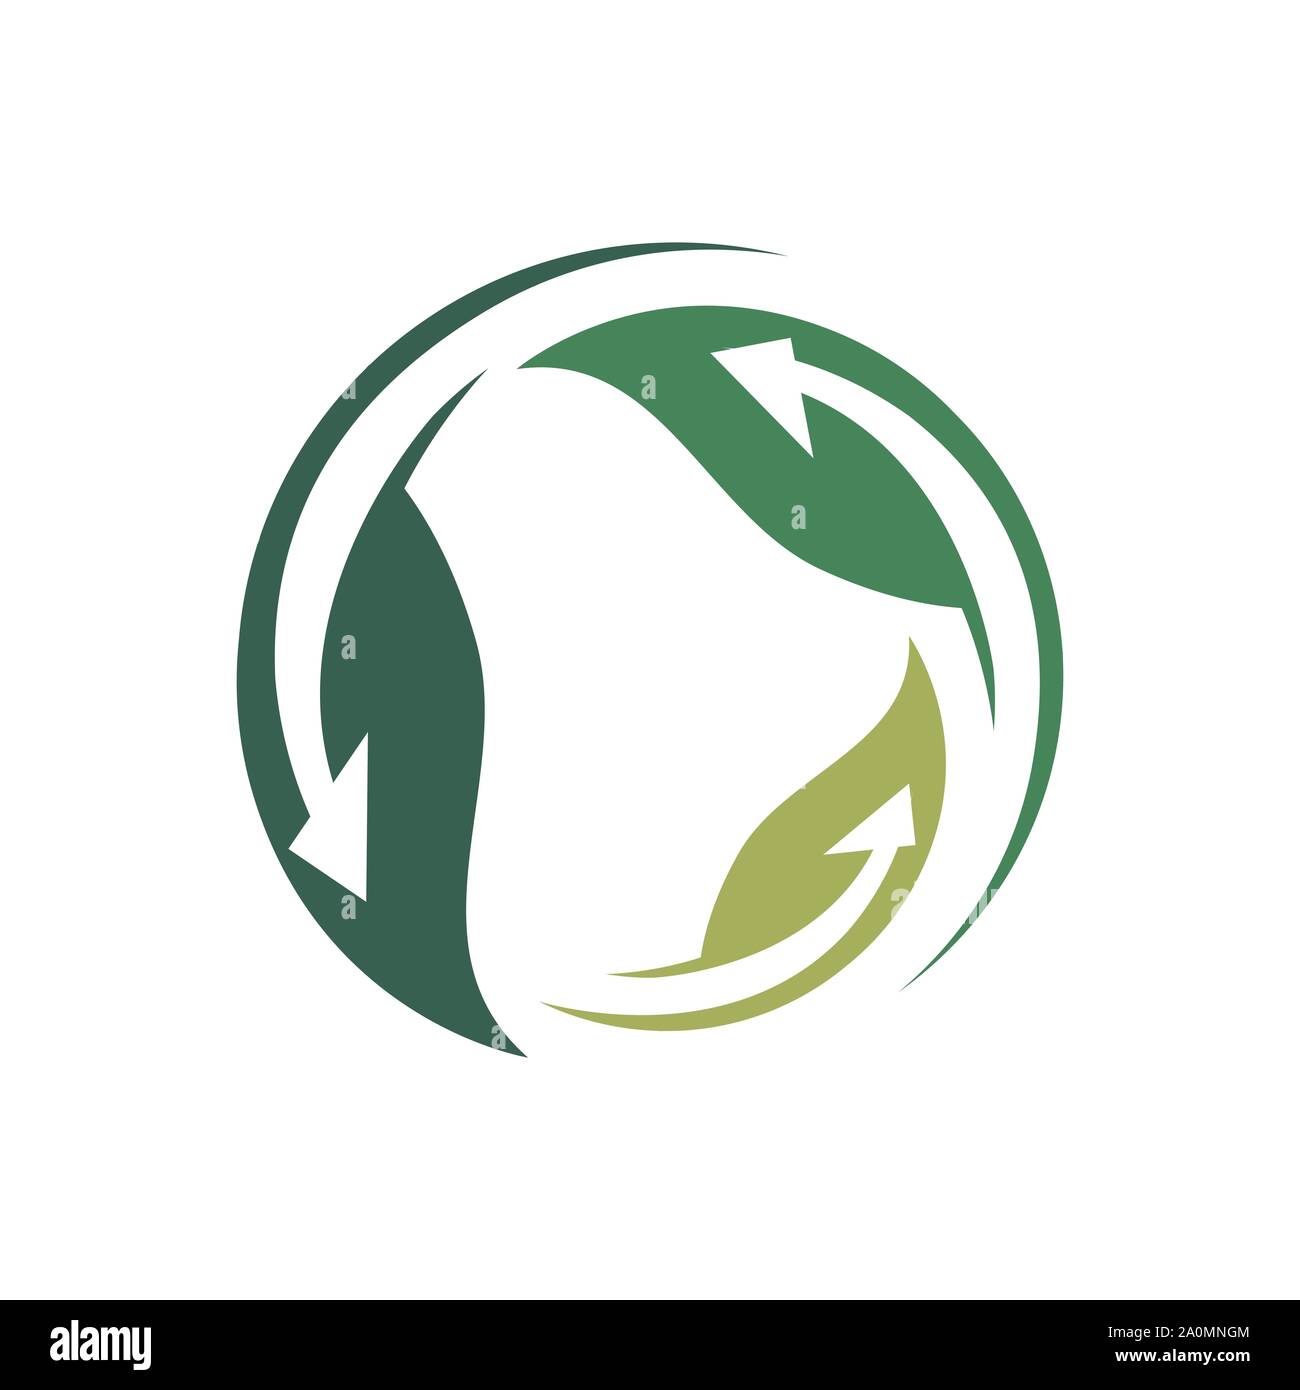 sign of alternative renewable energy logo design vector illustrations Stock Vector